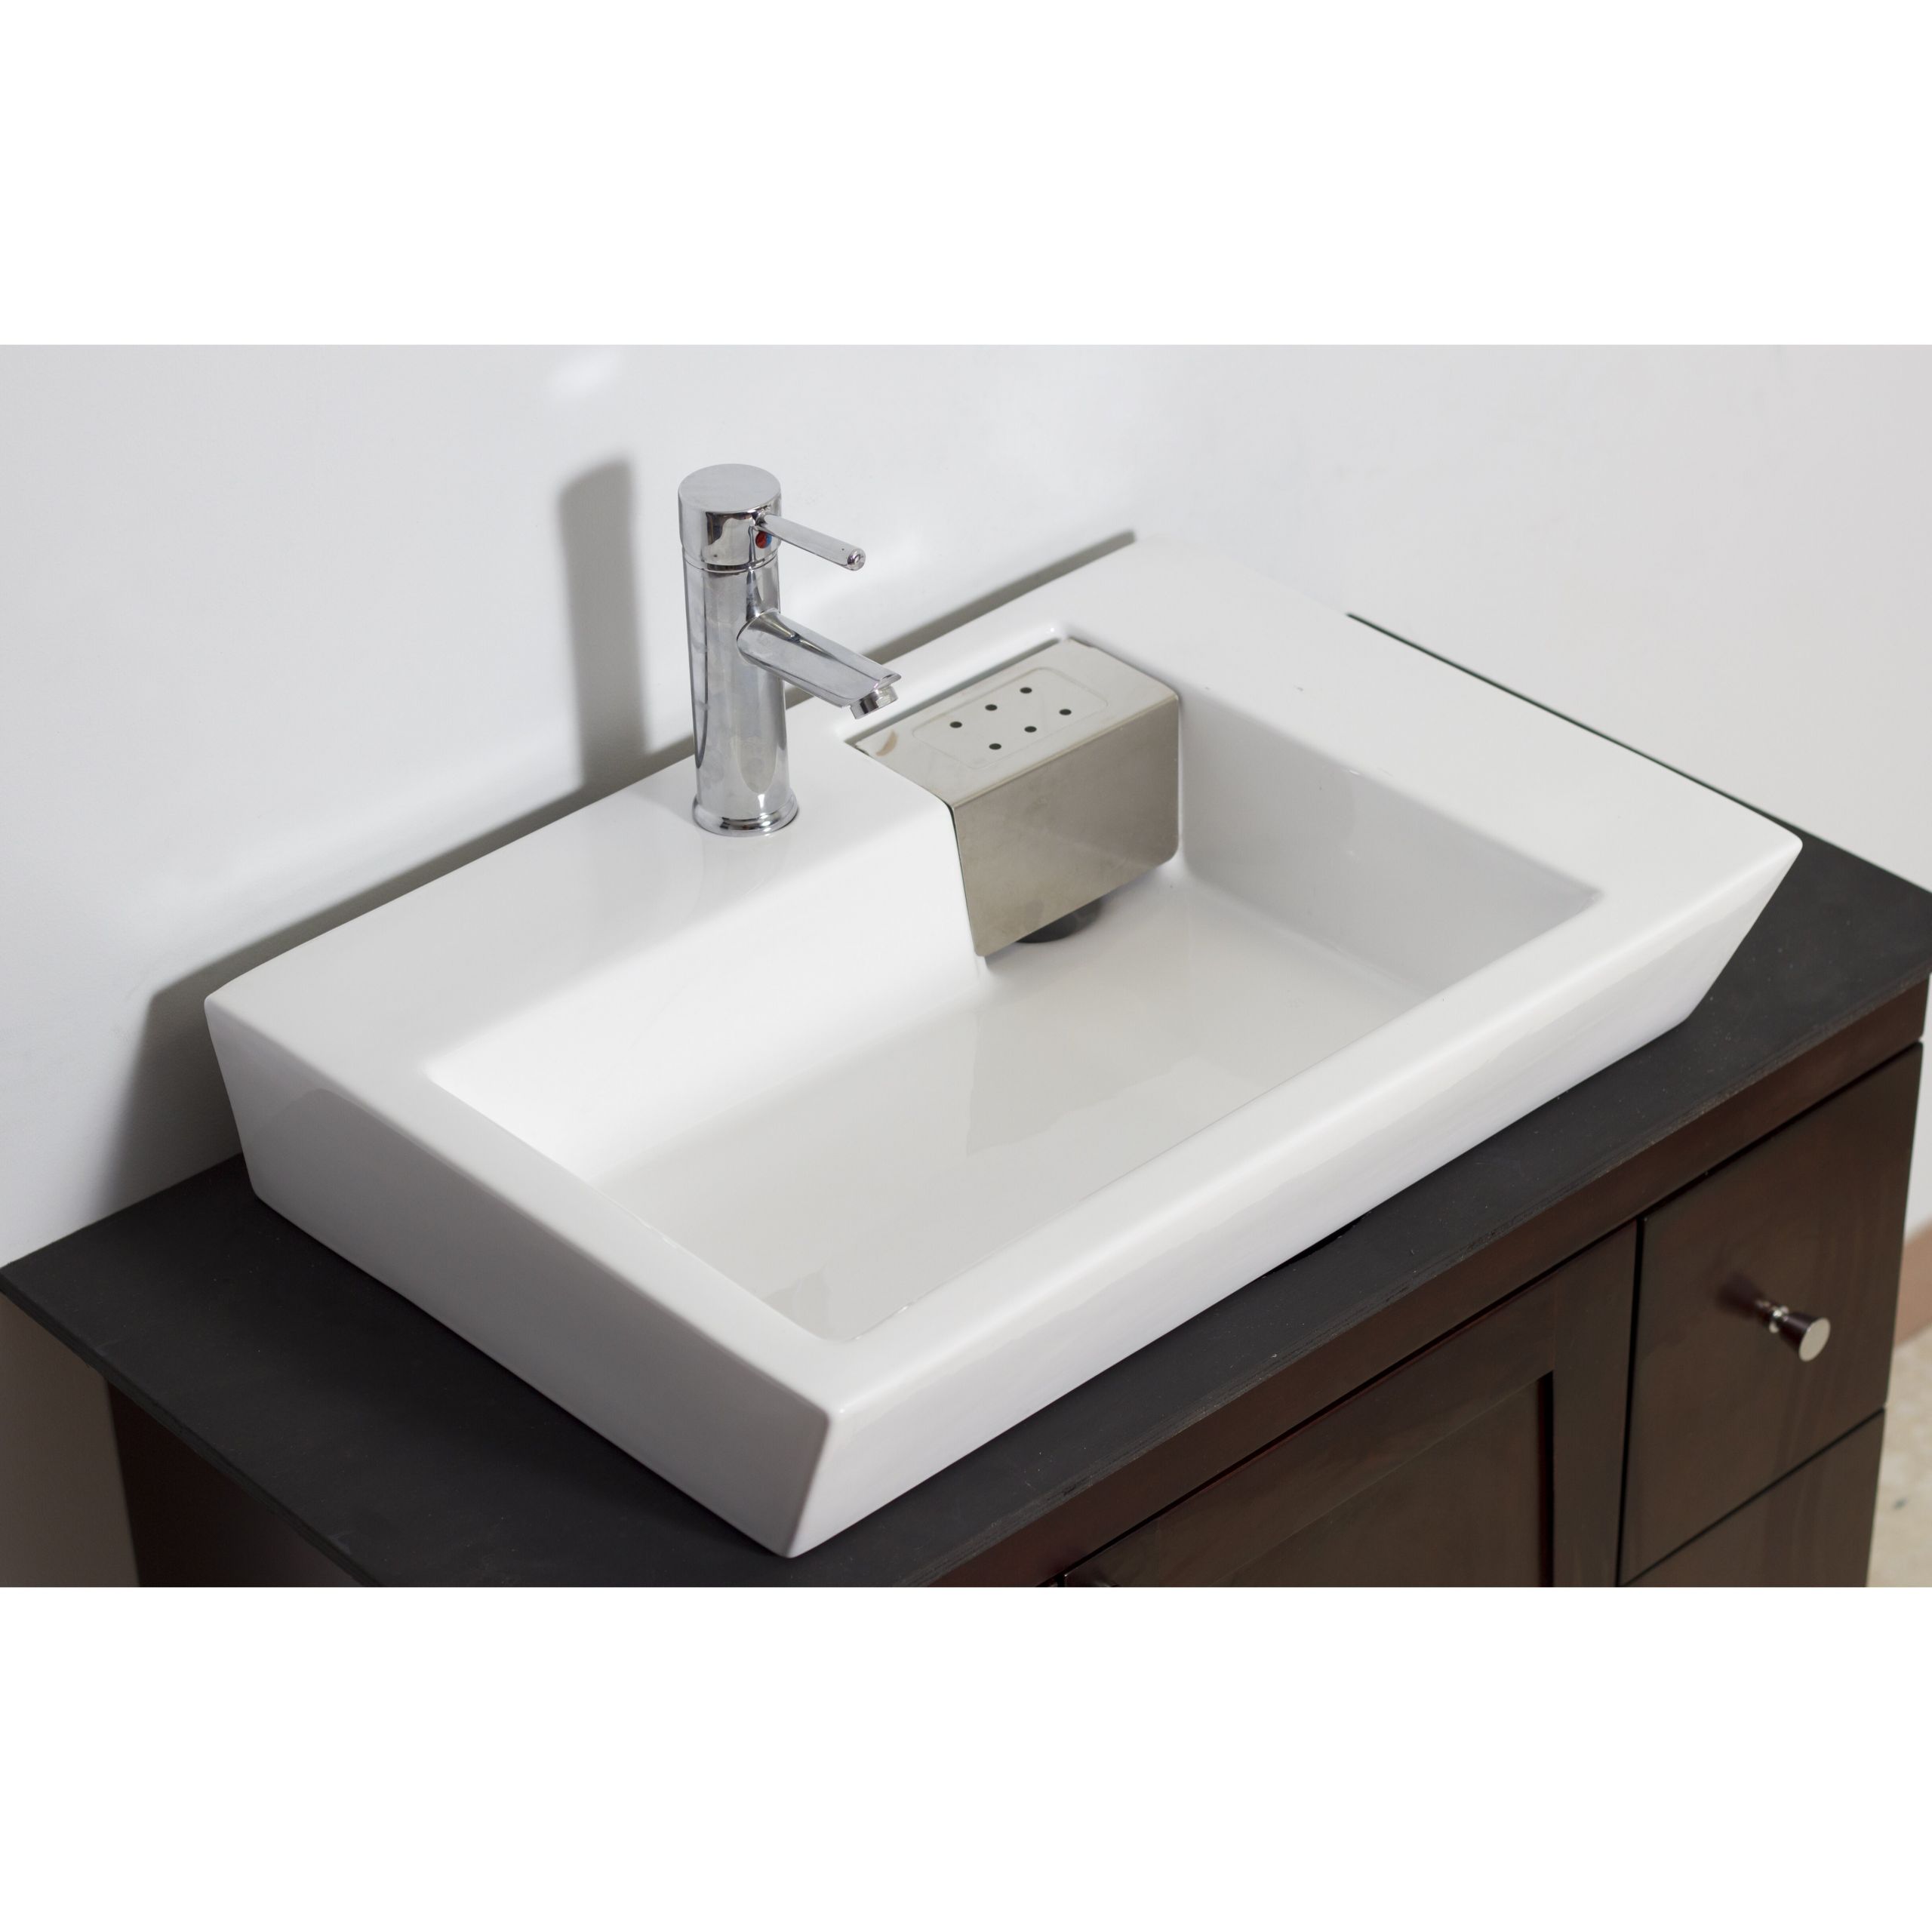 Rectangle Sink Bathroom
 American Imaginations Counter Rectangle Vessel